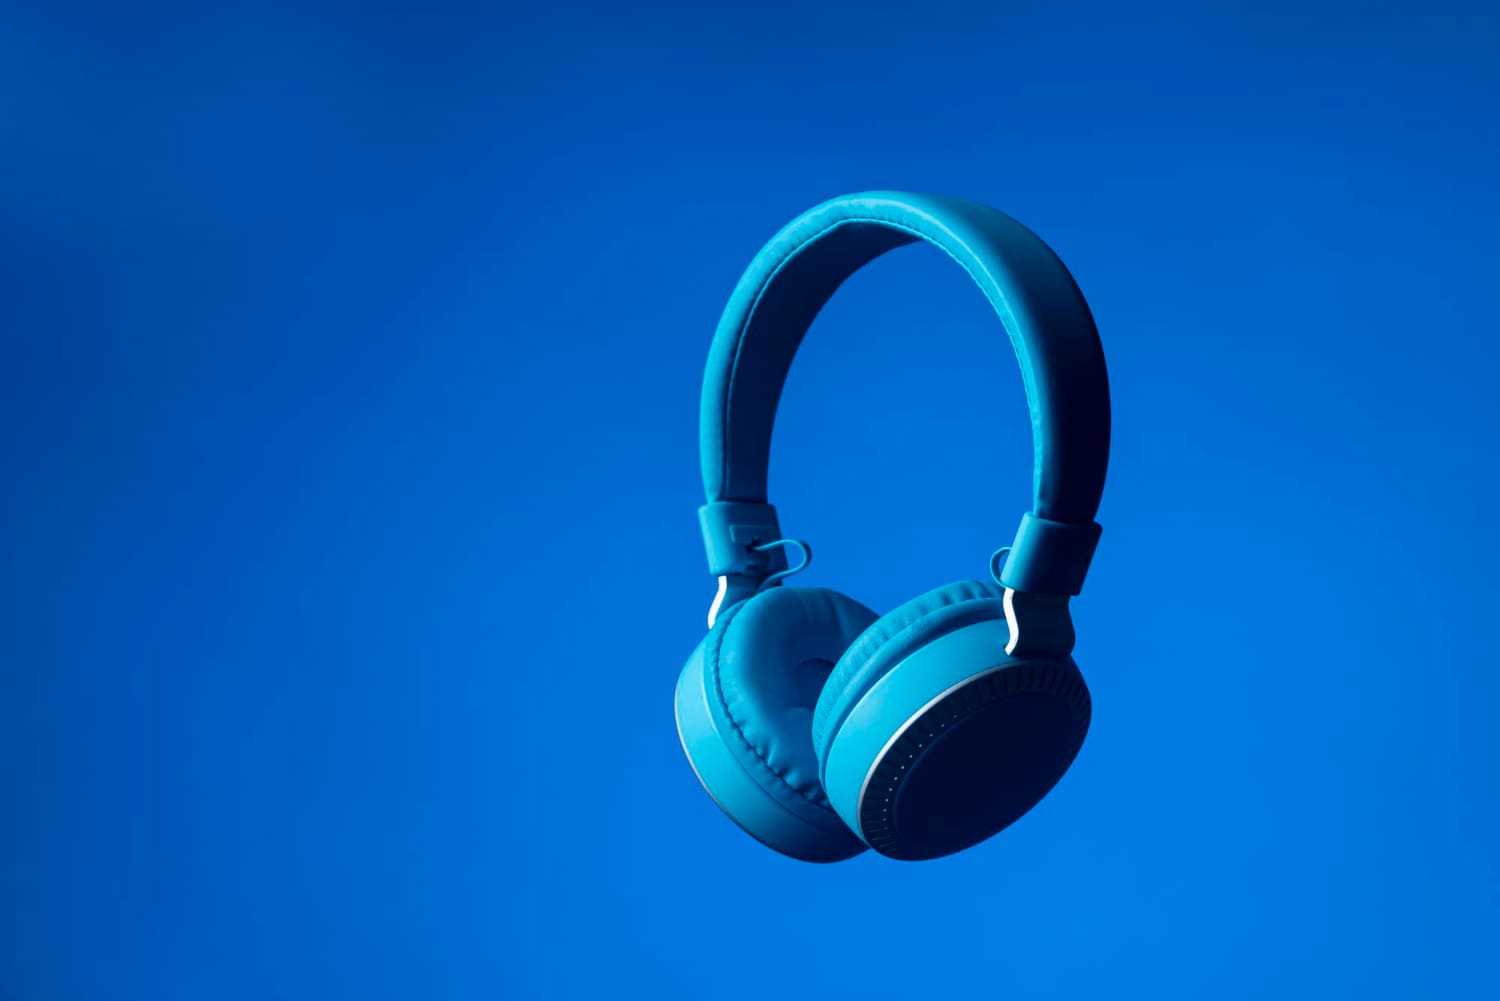 Blue Beats Headphones